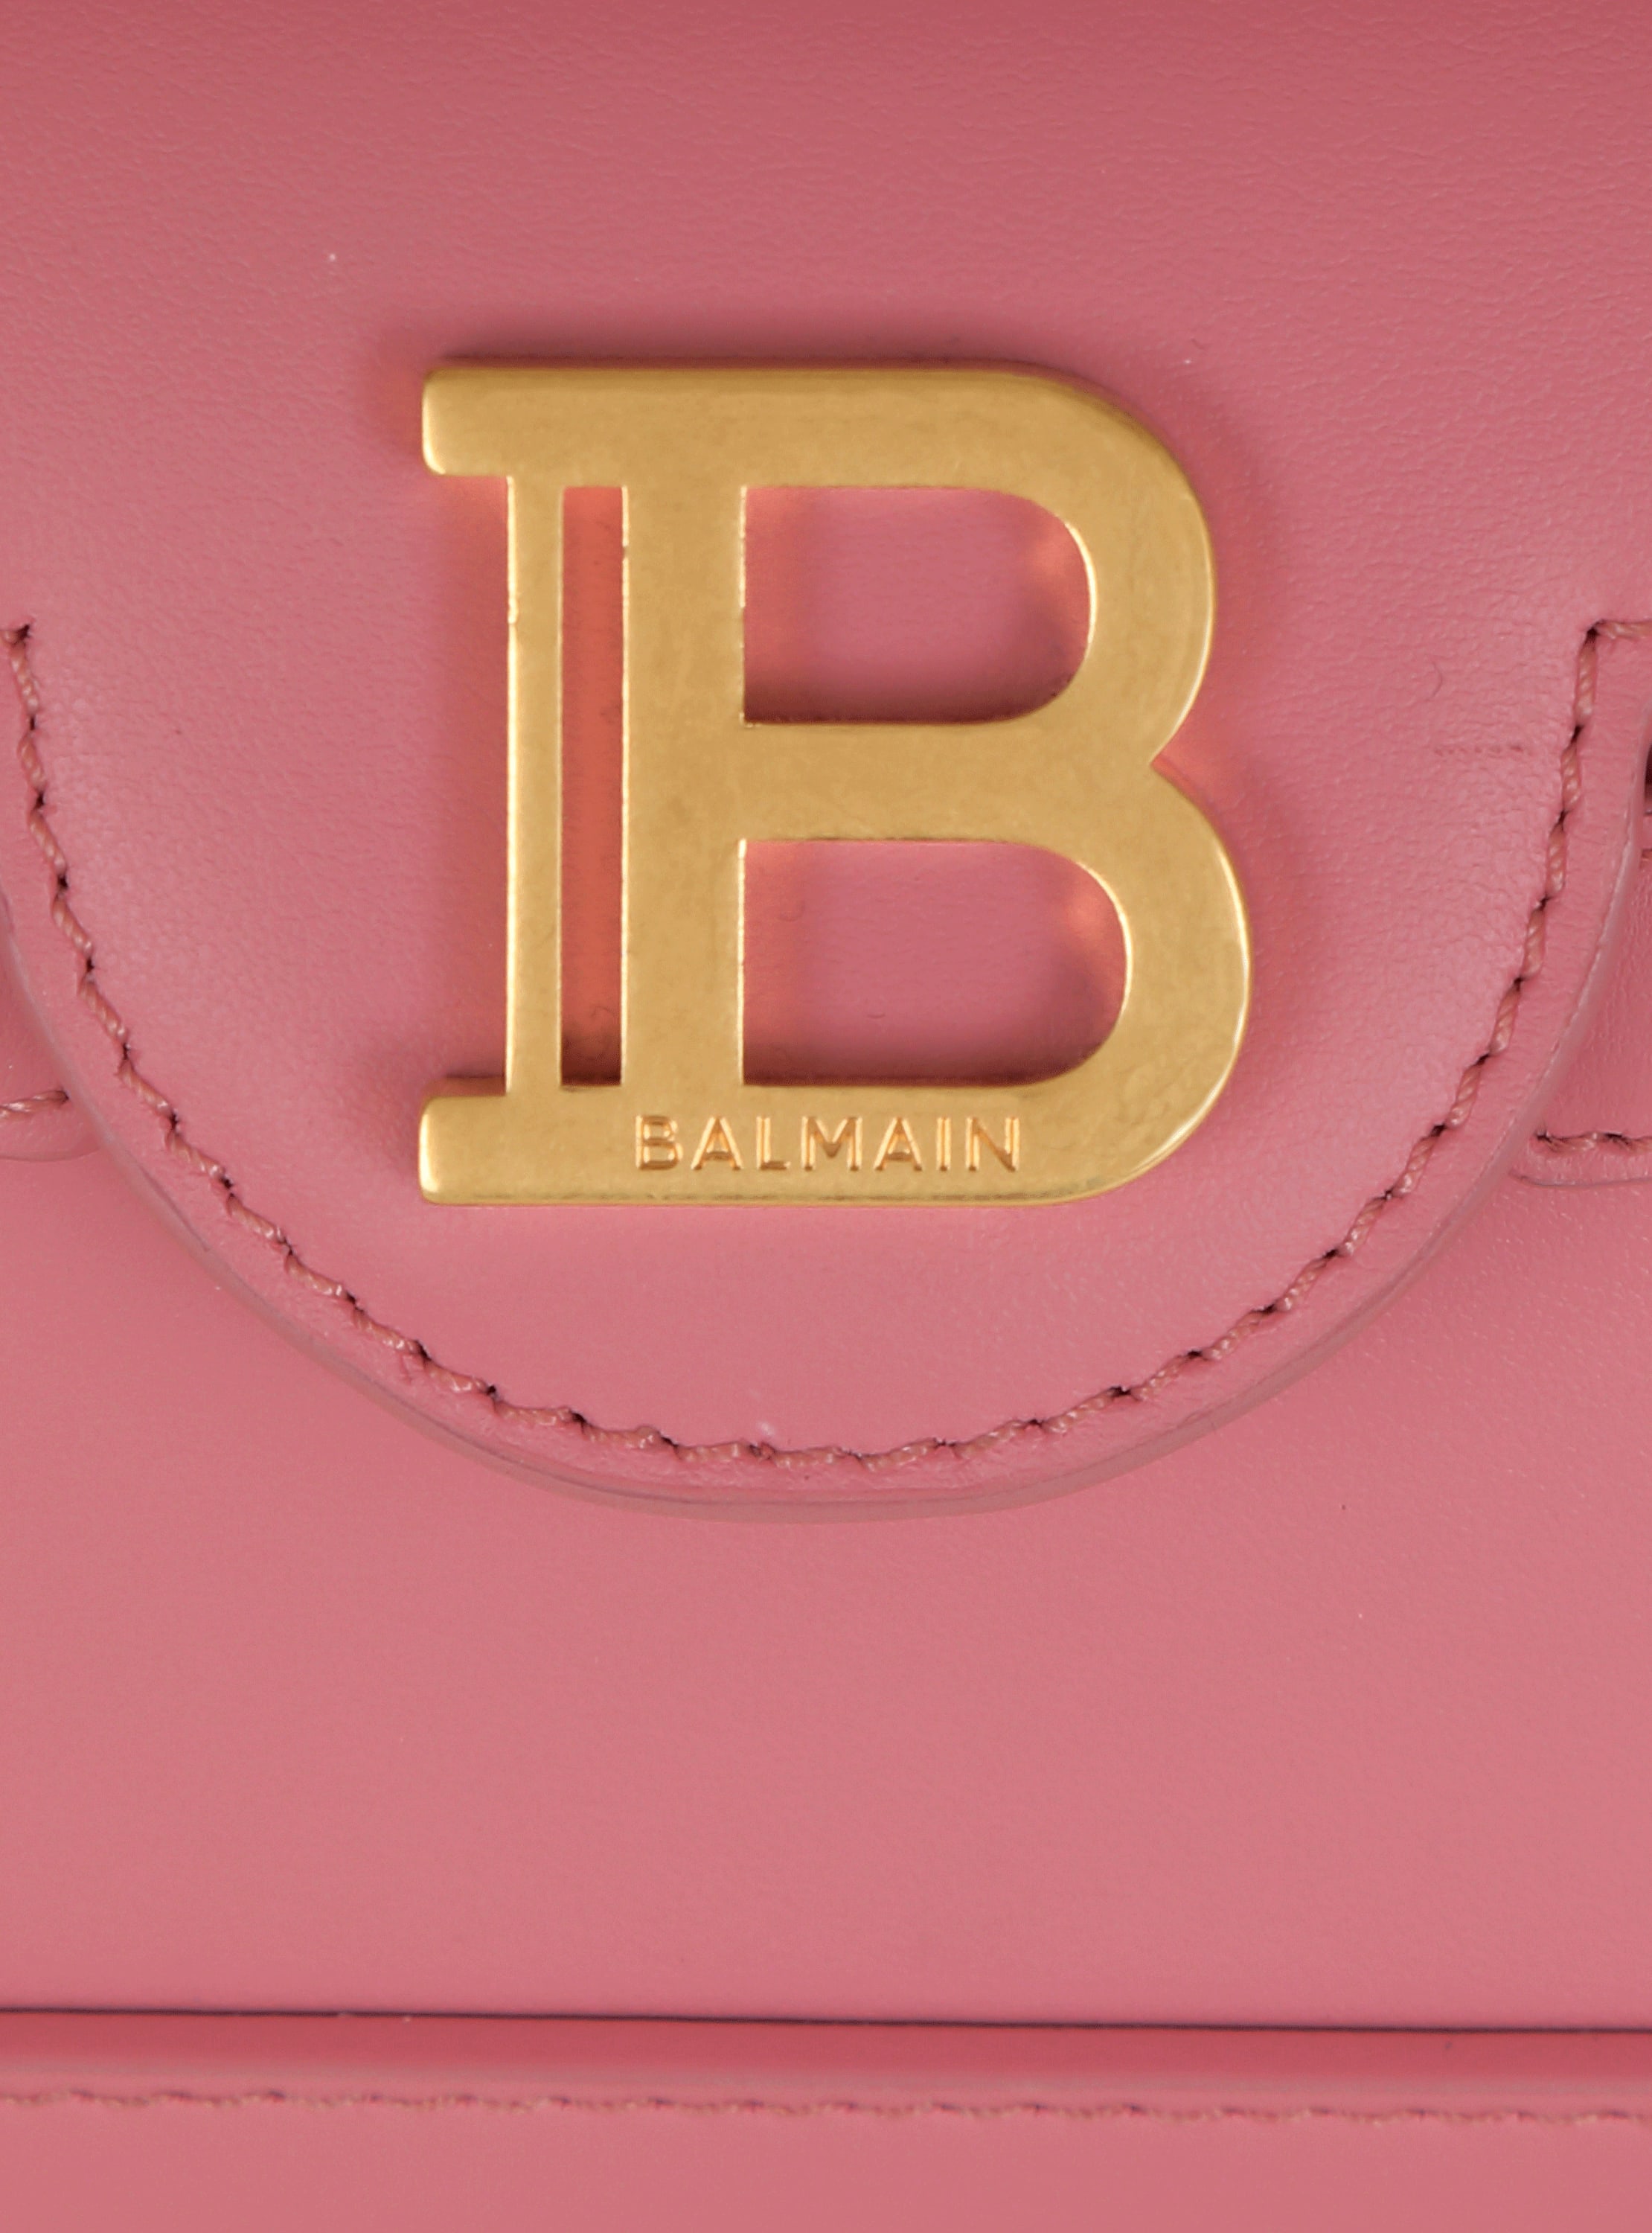 BALMAIN: B-Buzz 22 bag in leather - Pink  Balmain handbag BN1DA797LAVE  online at